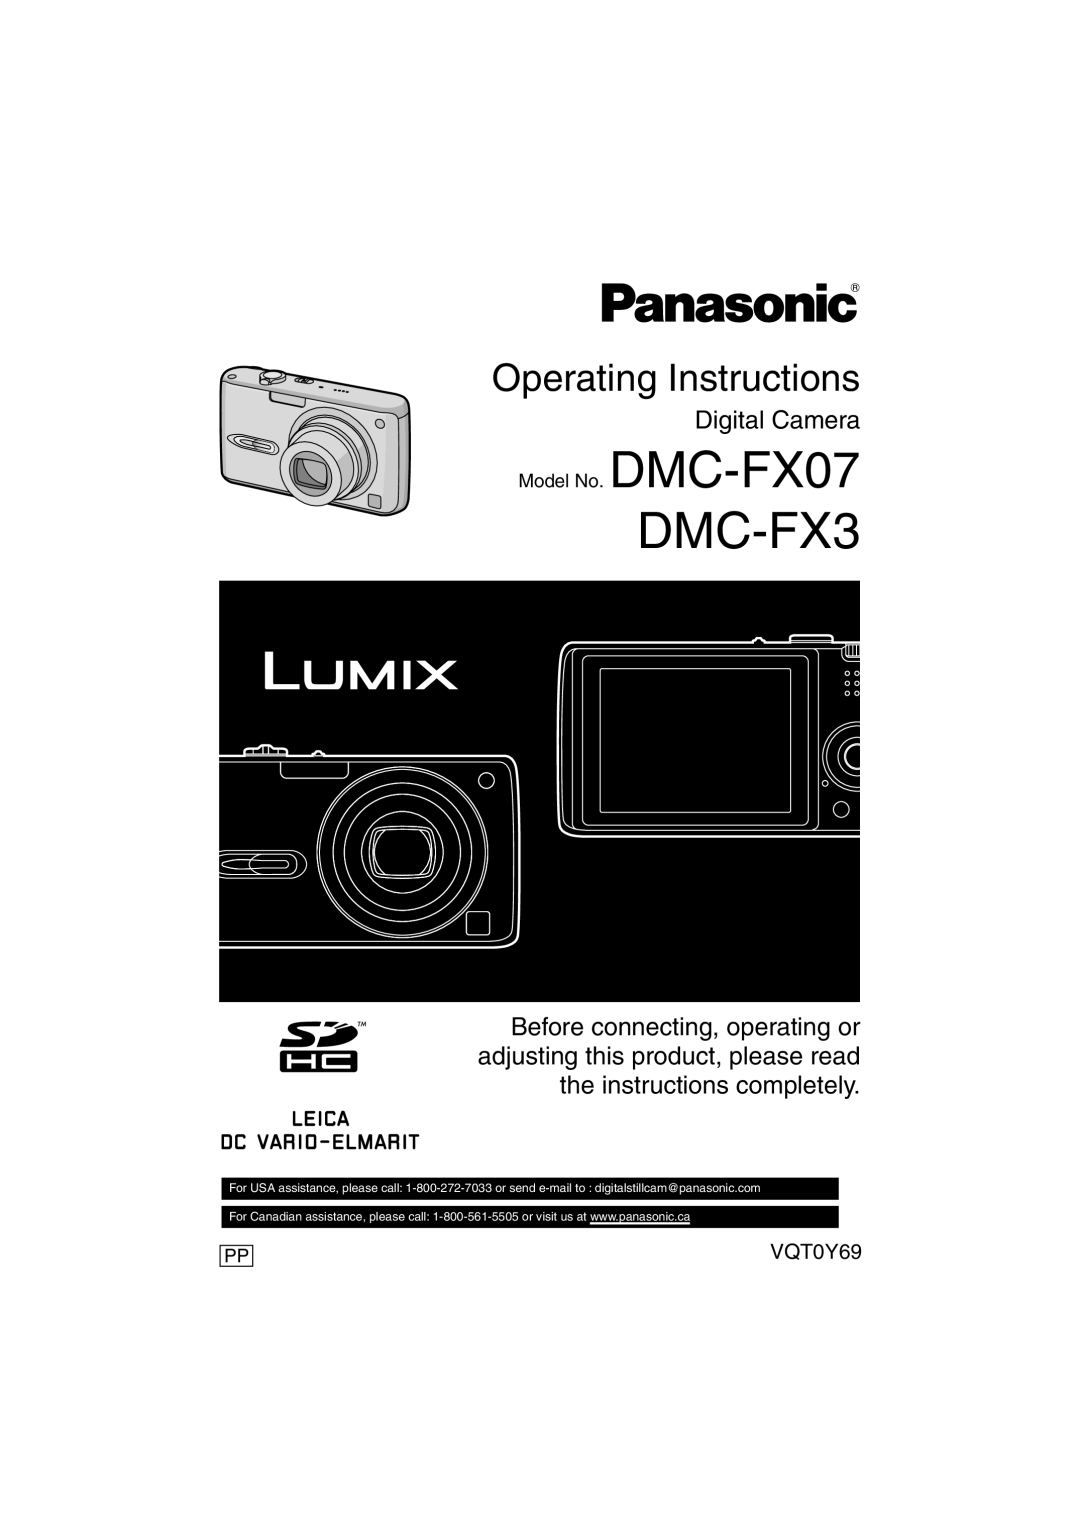 Panasonic DMC-FX3, DMC-FX07 operating instructions VQT0Y69, Operating Instructions, Digital Camera 